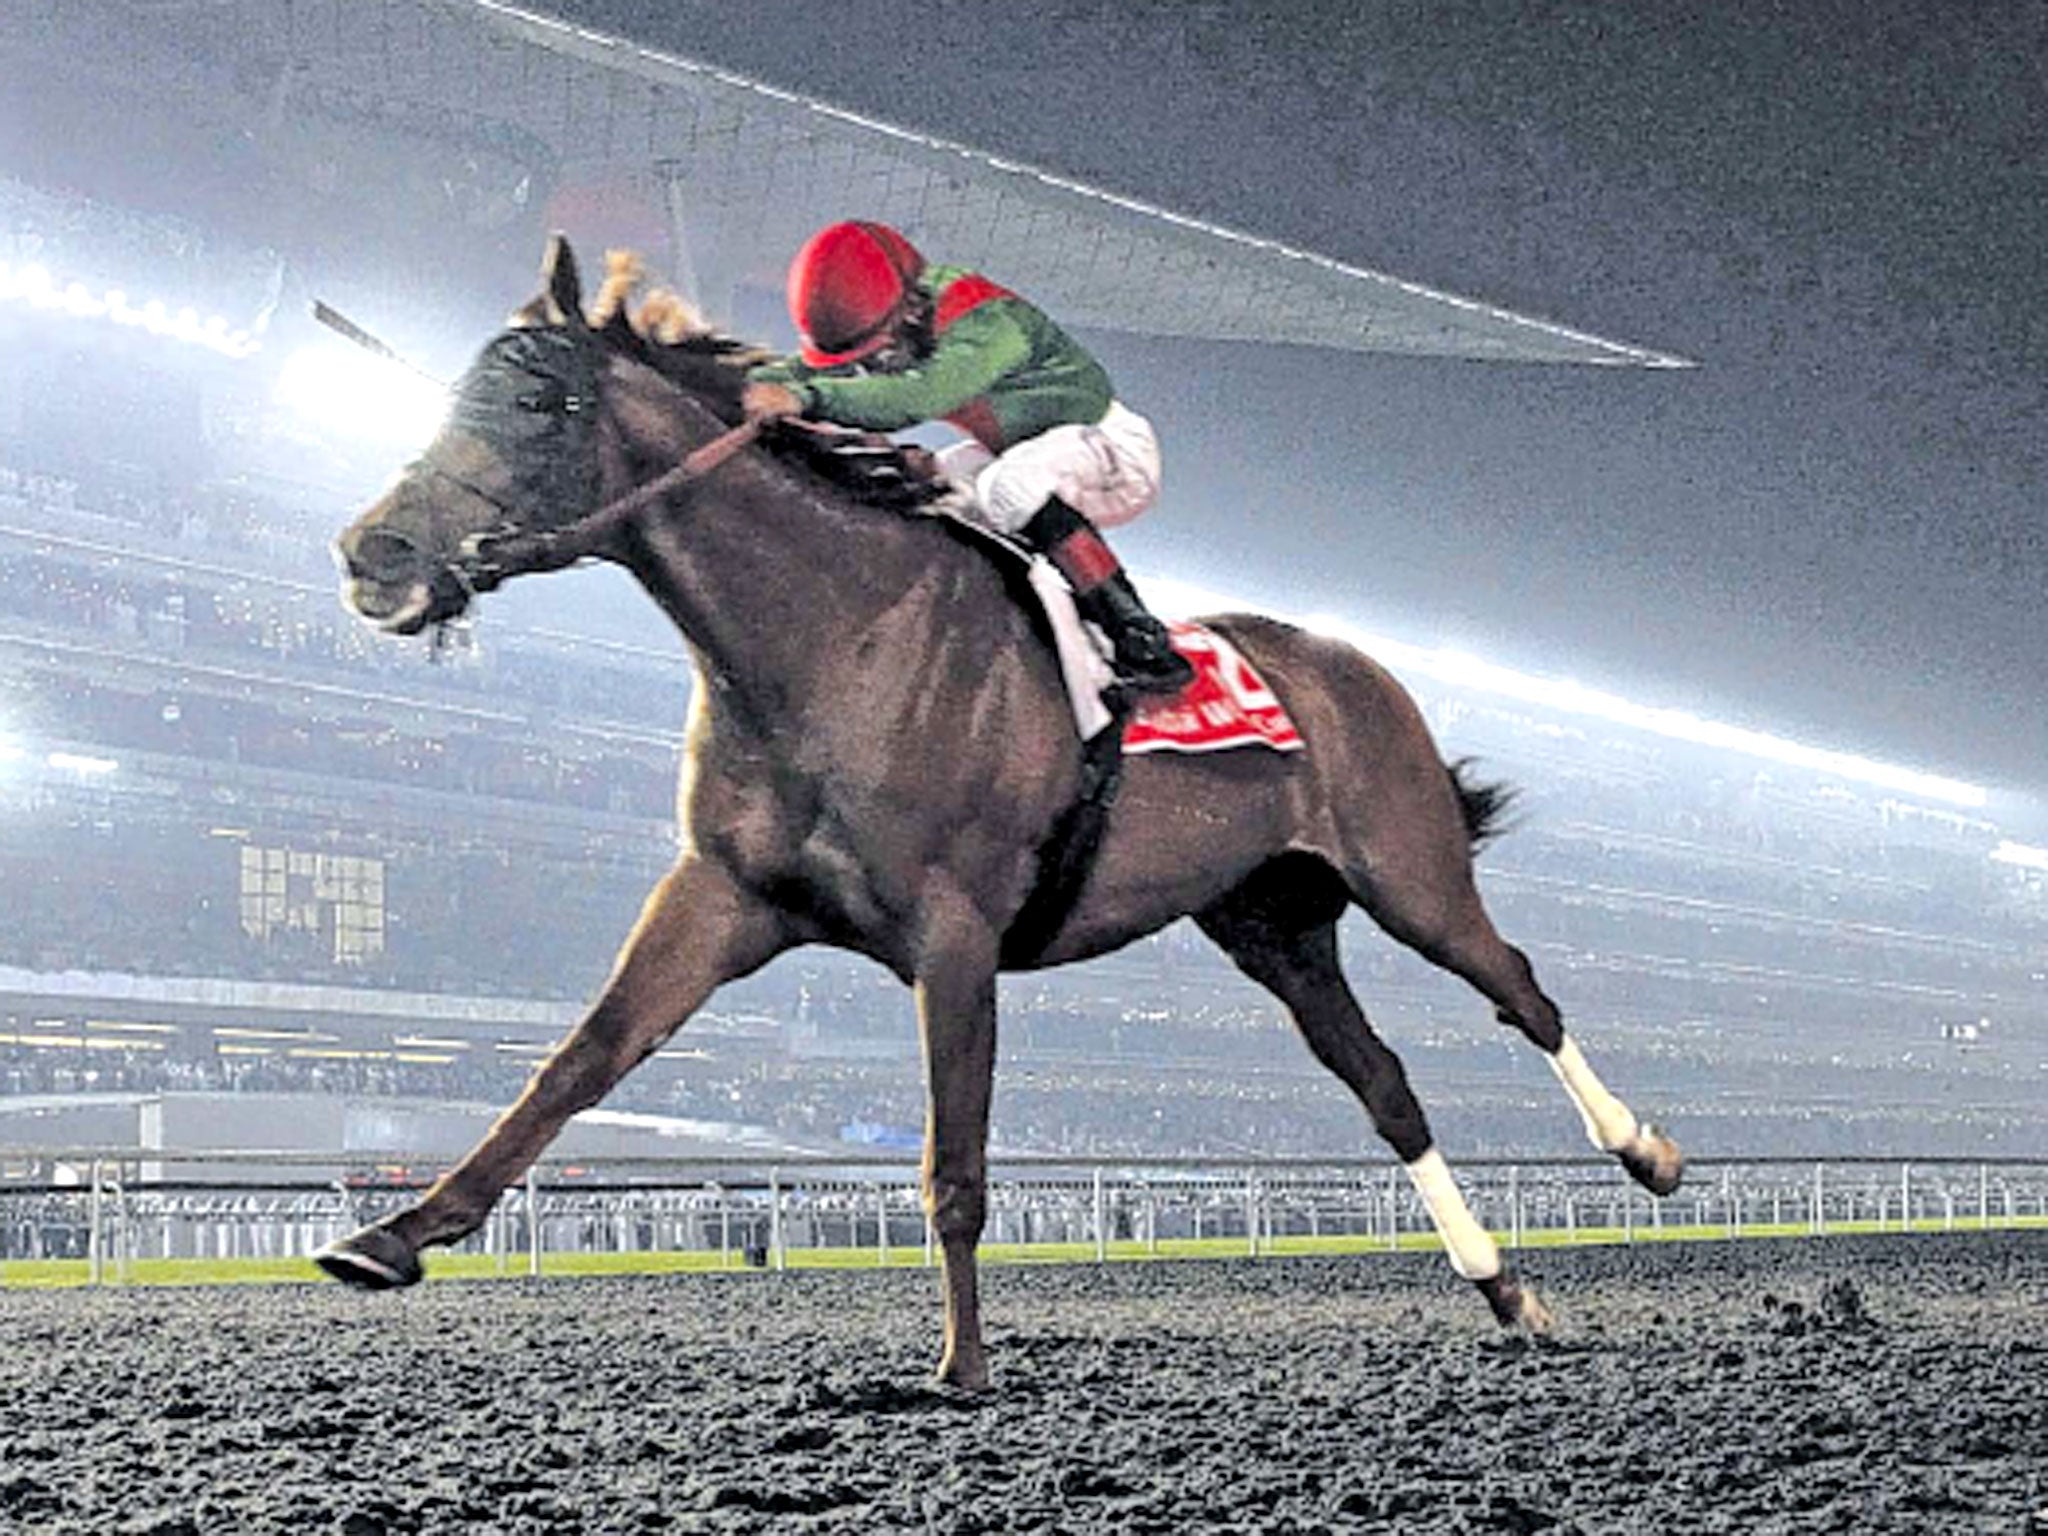 Animal Kingdom strides out to victory in Dubai under jockey Joel Rosario